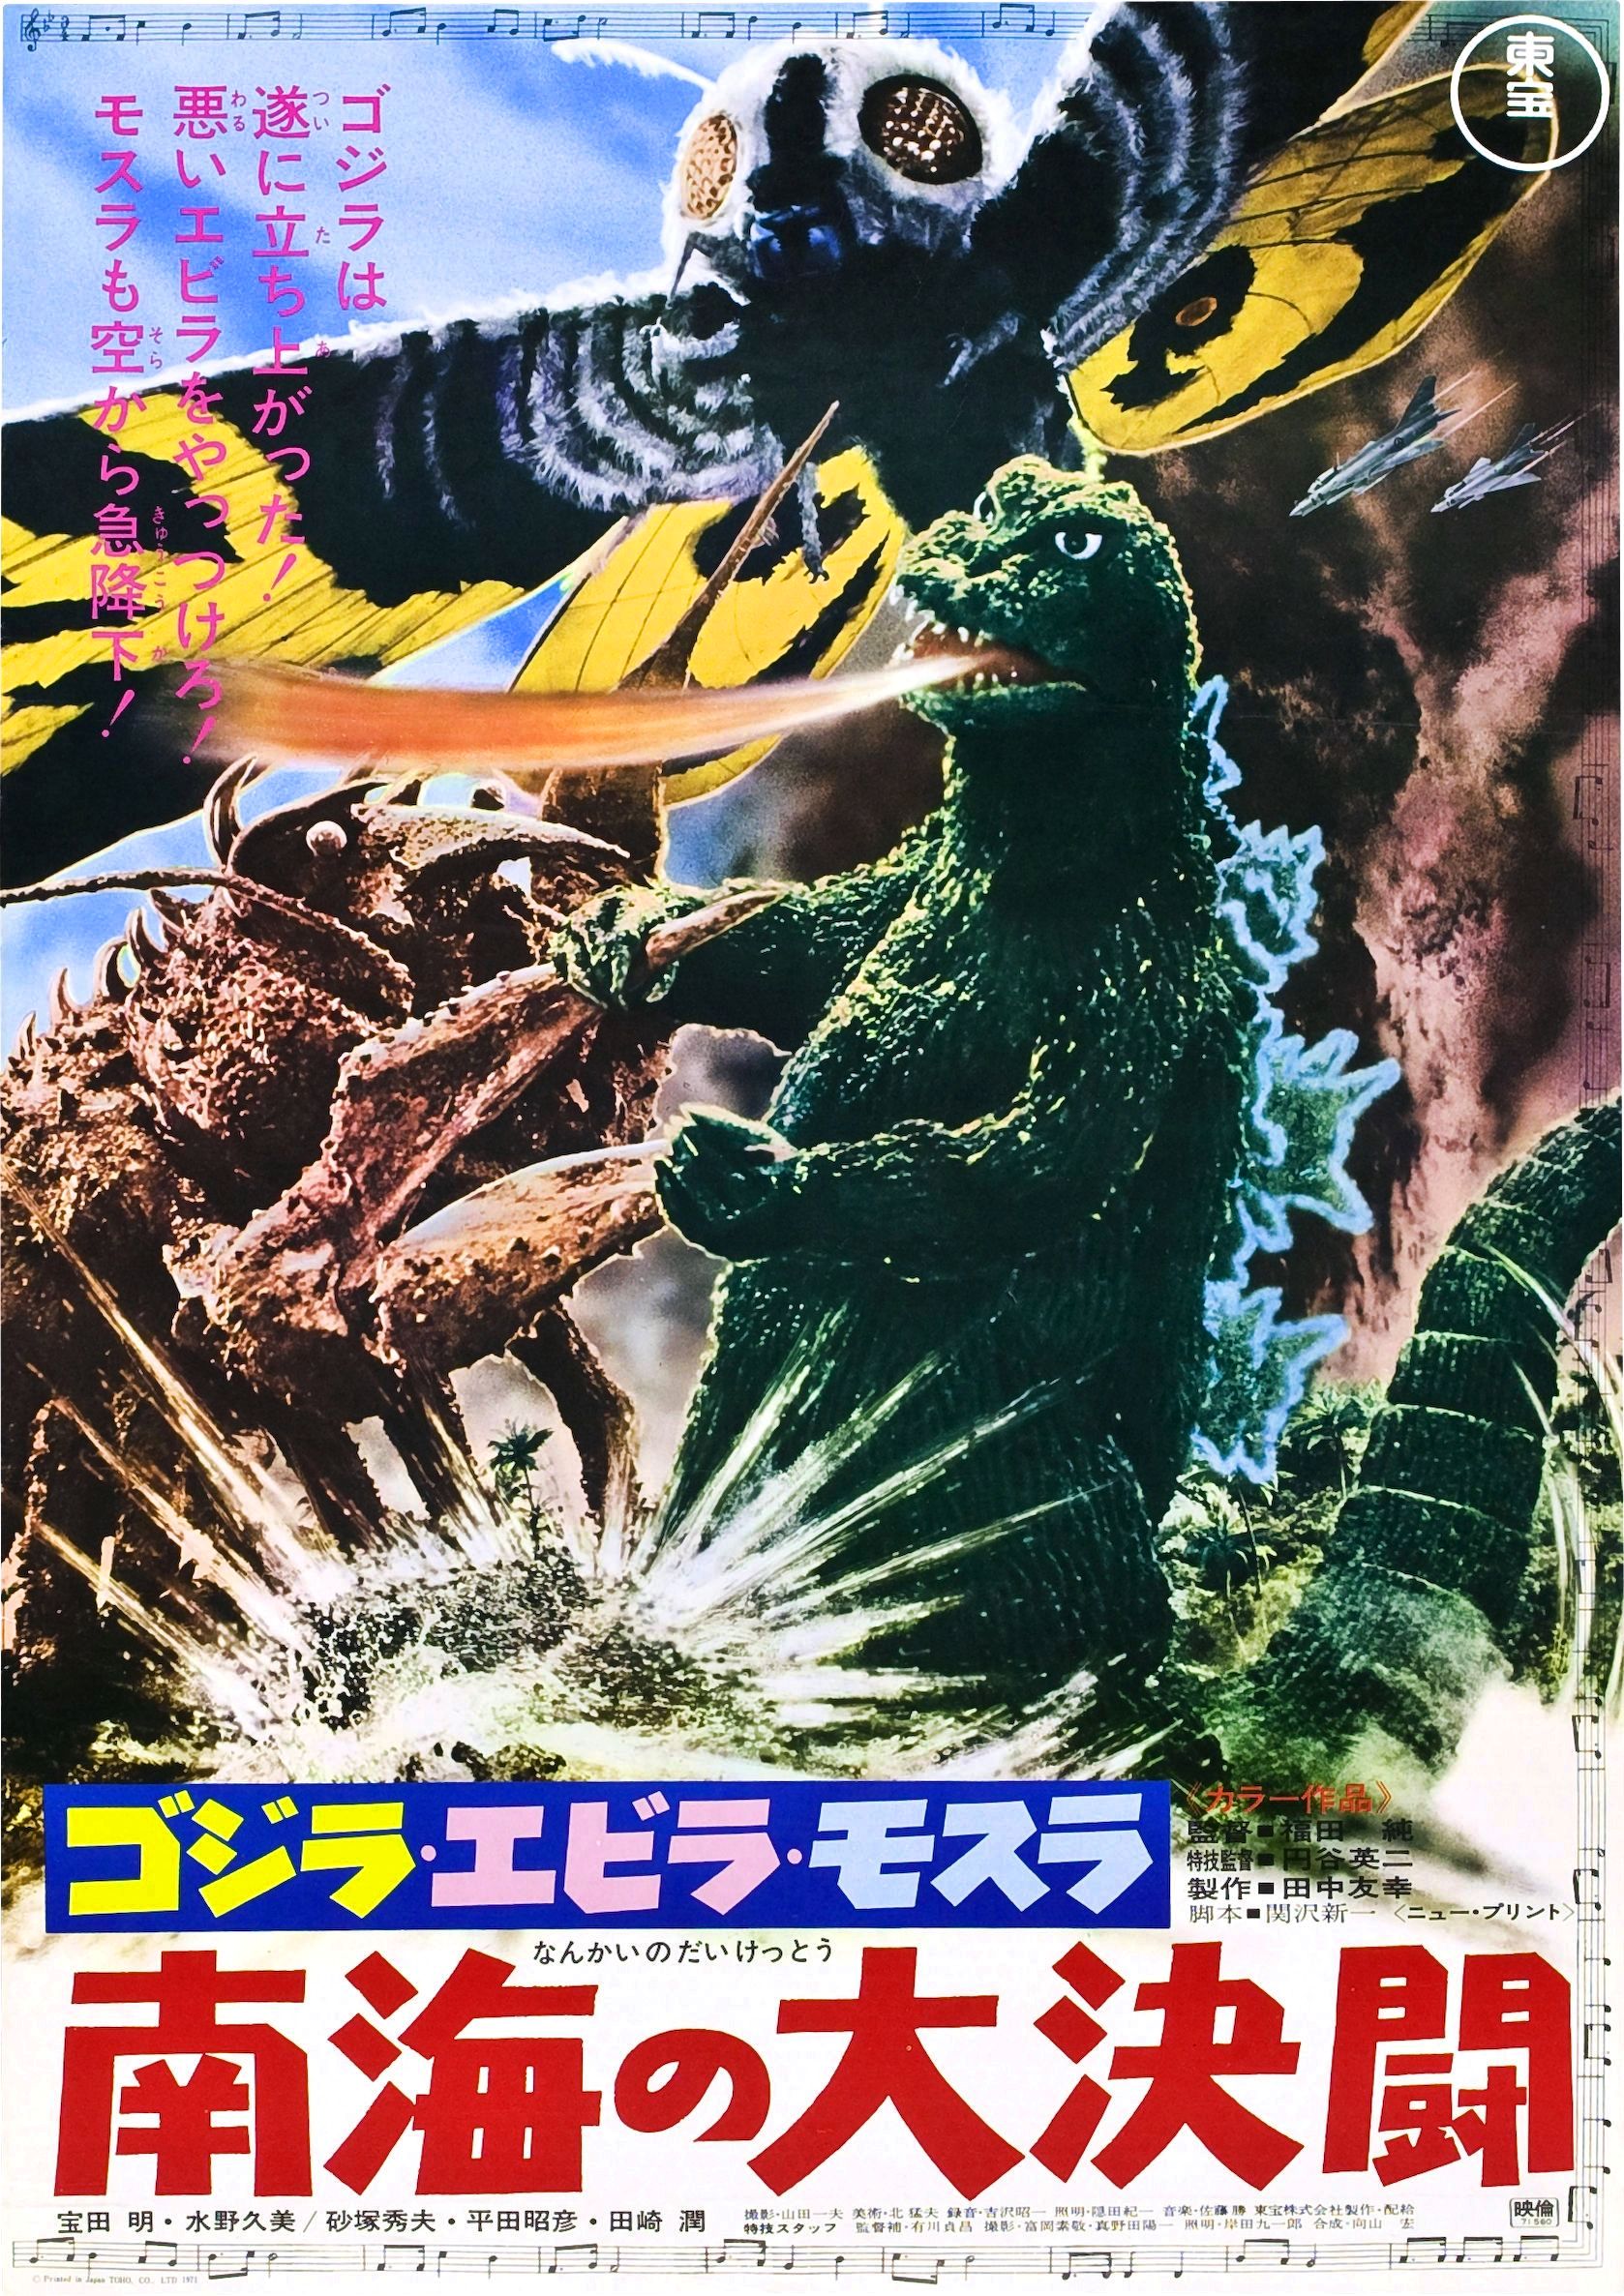 Godzilla Japanese Logo